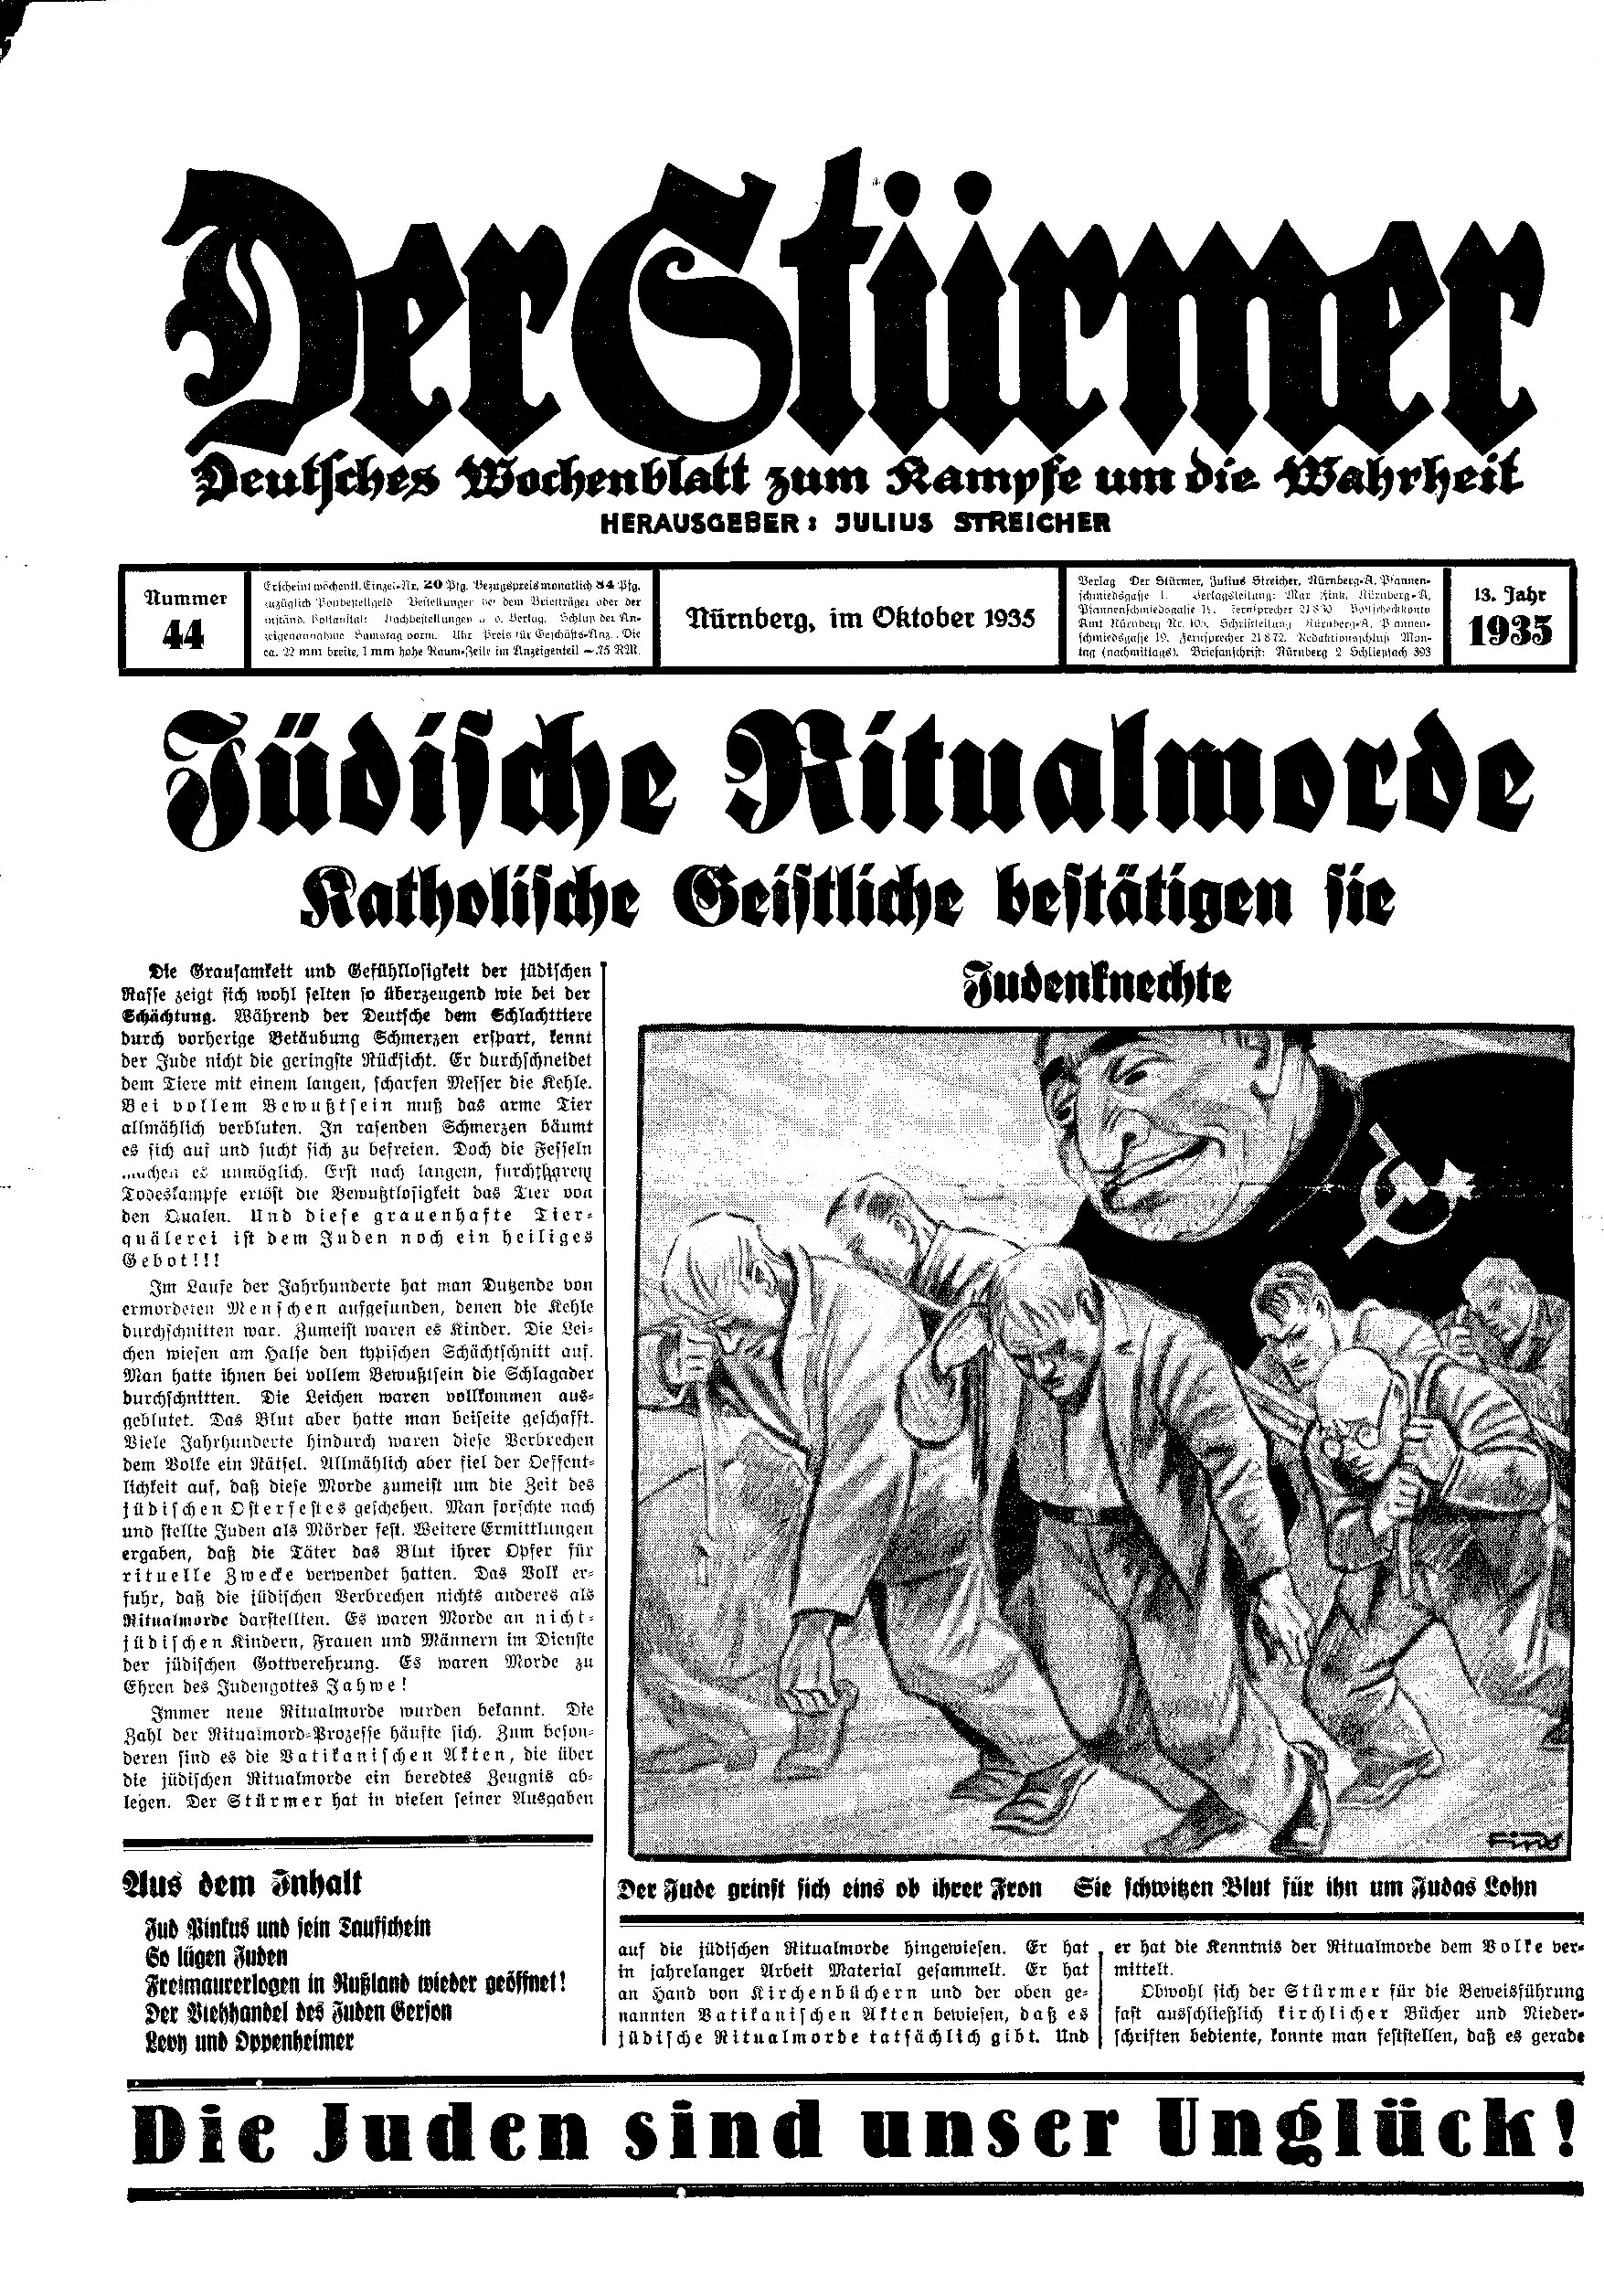 Der Stürmer - 1935 Nr. 44 - Jüdische Ritualmorde